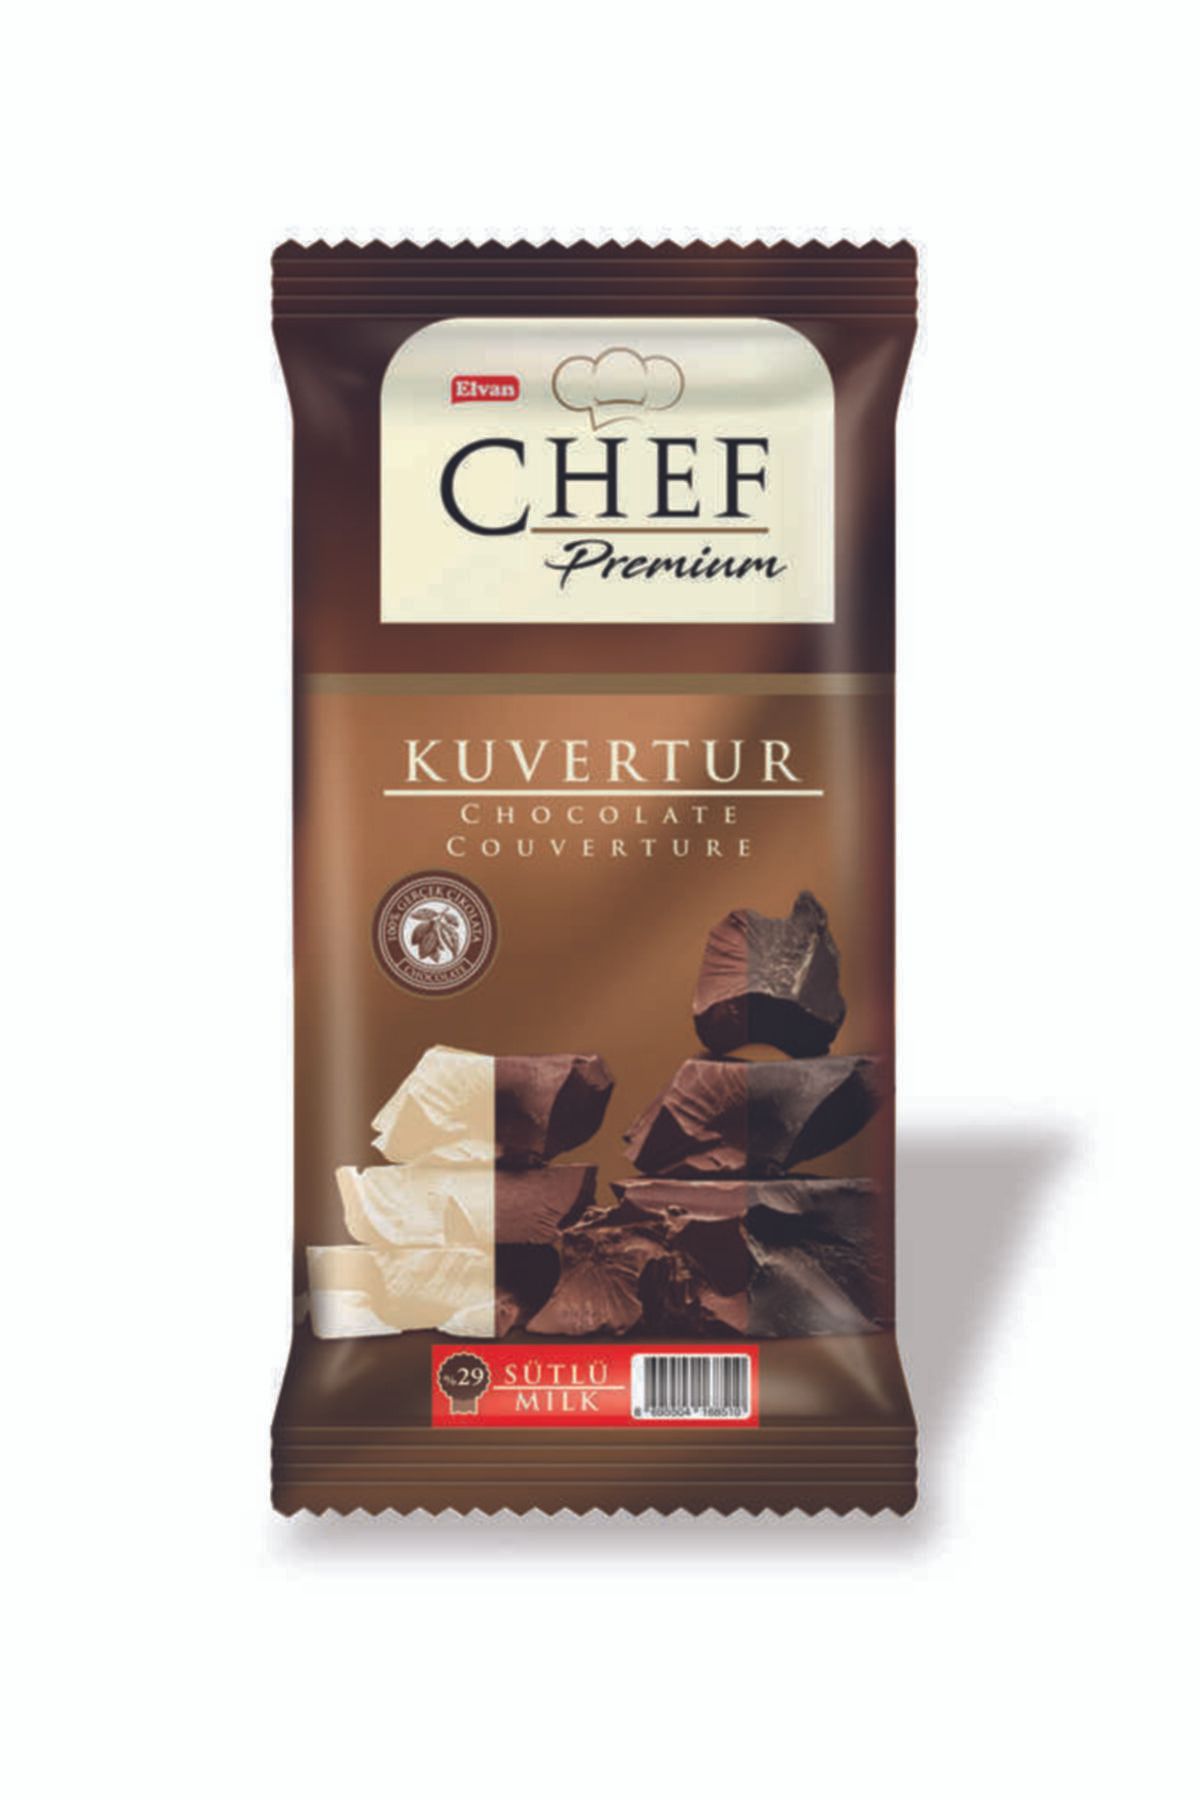 Elvan Chef Premium Yüzde 29 Sütlü Mini Kuvertür 200 Gr. (1adet)